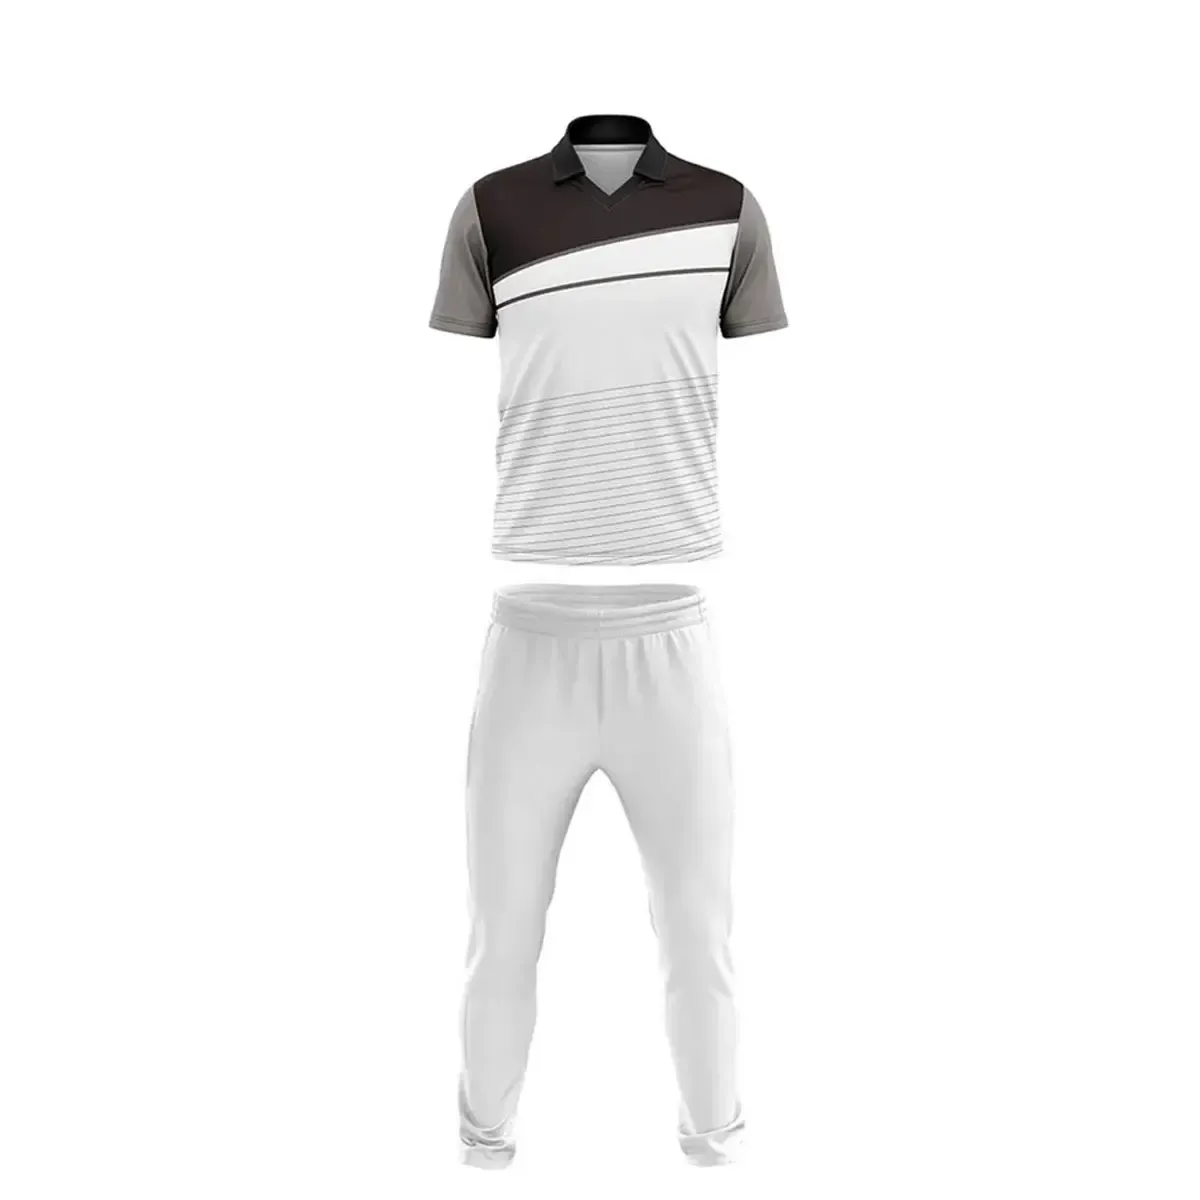 Uniforme deportivo para hombre, pantalón de cricket y top de manga corta, uniforme de cricket transpirable para hombre, fabricado en Pakistán